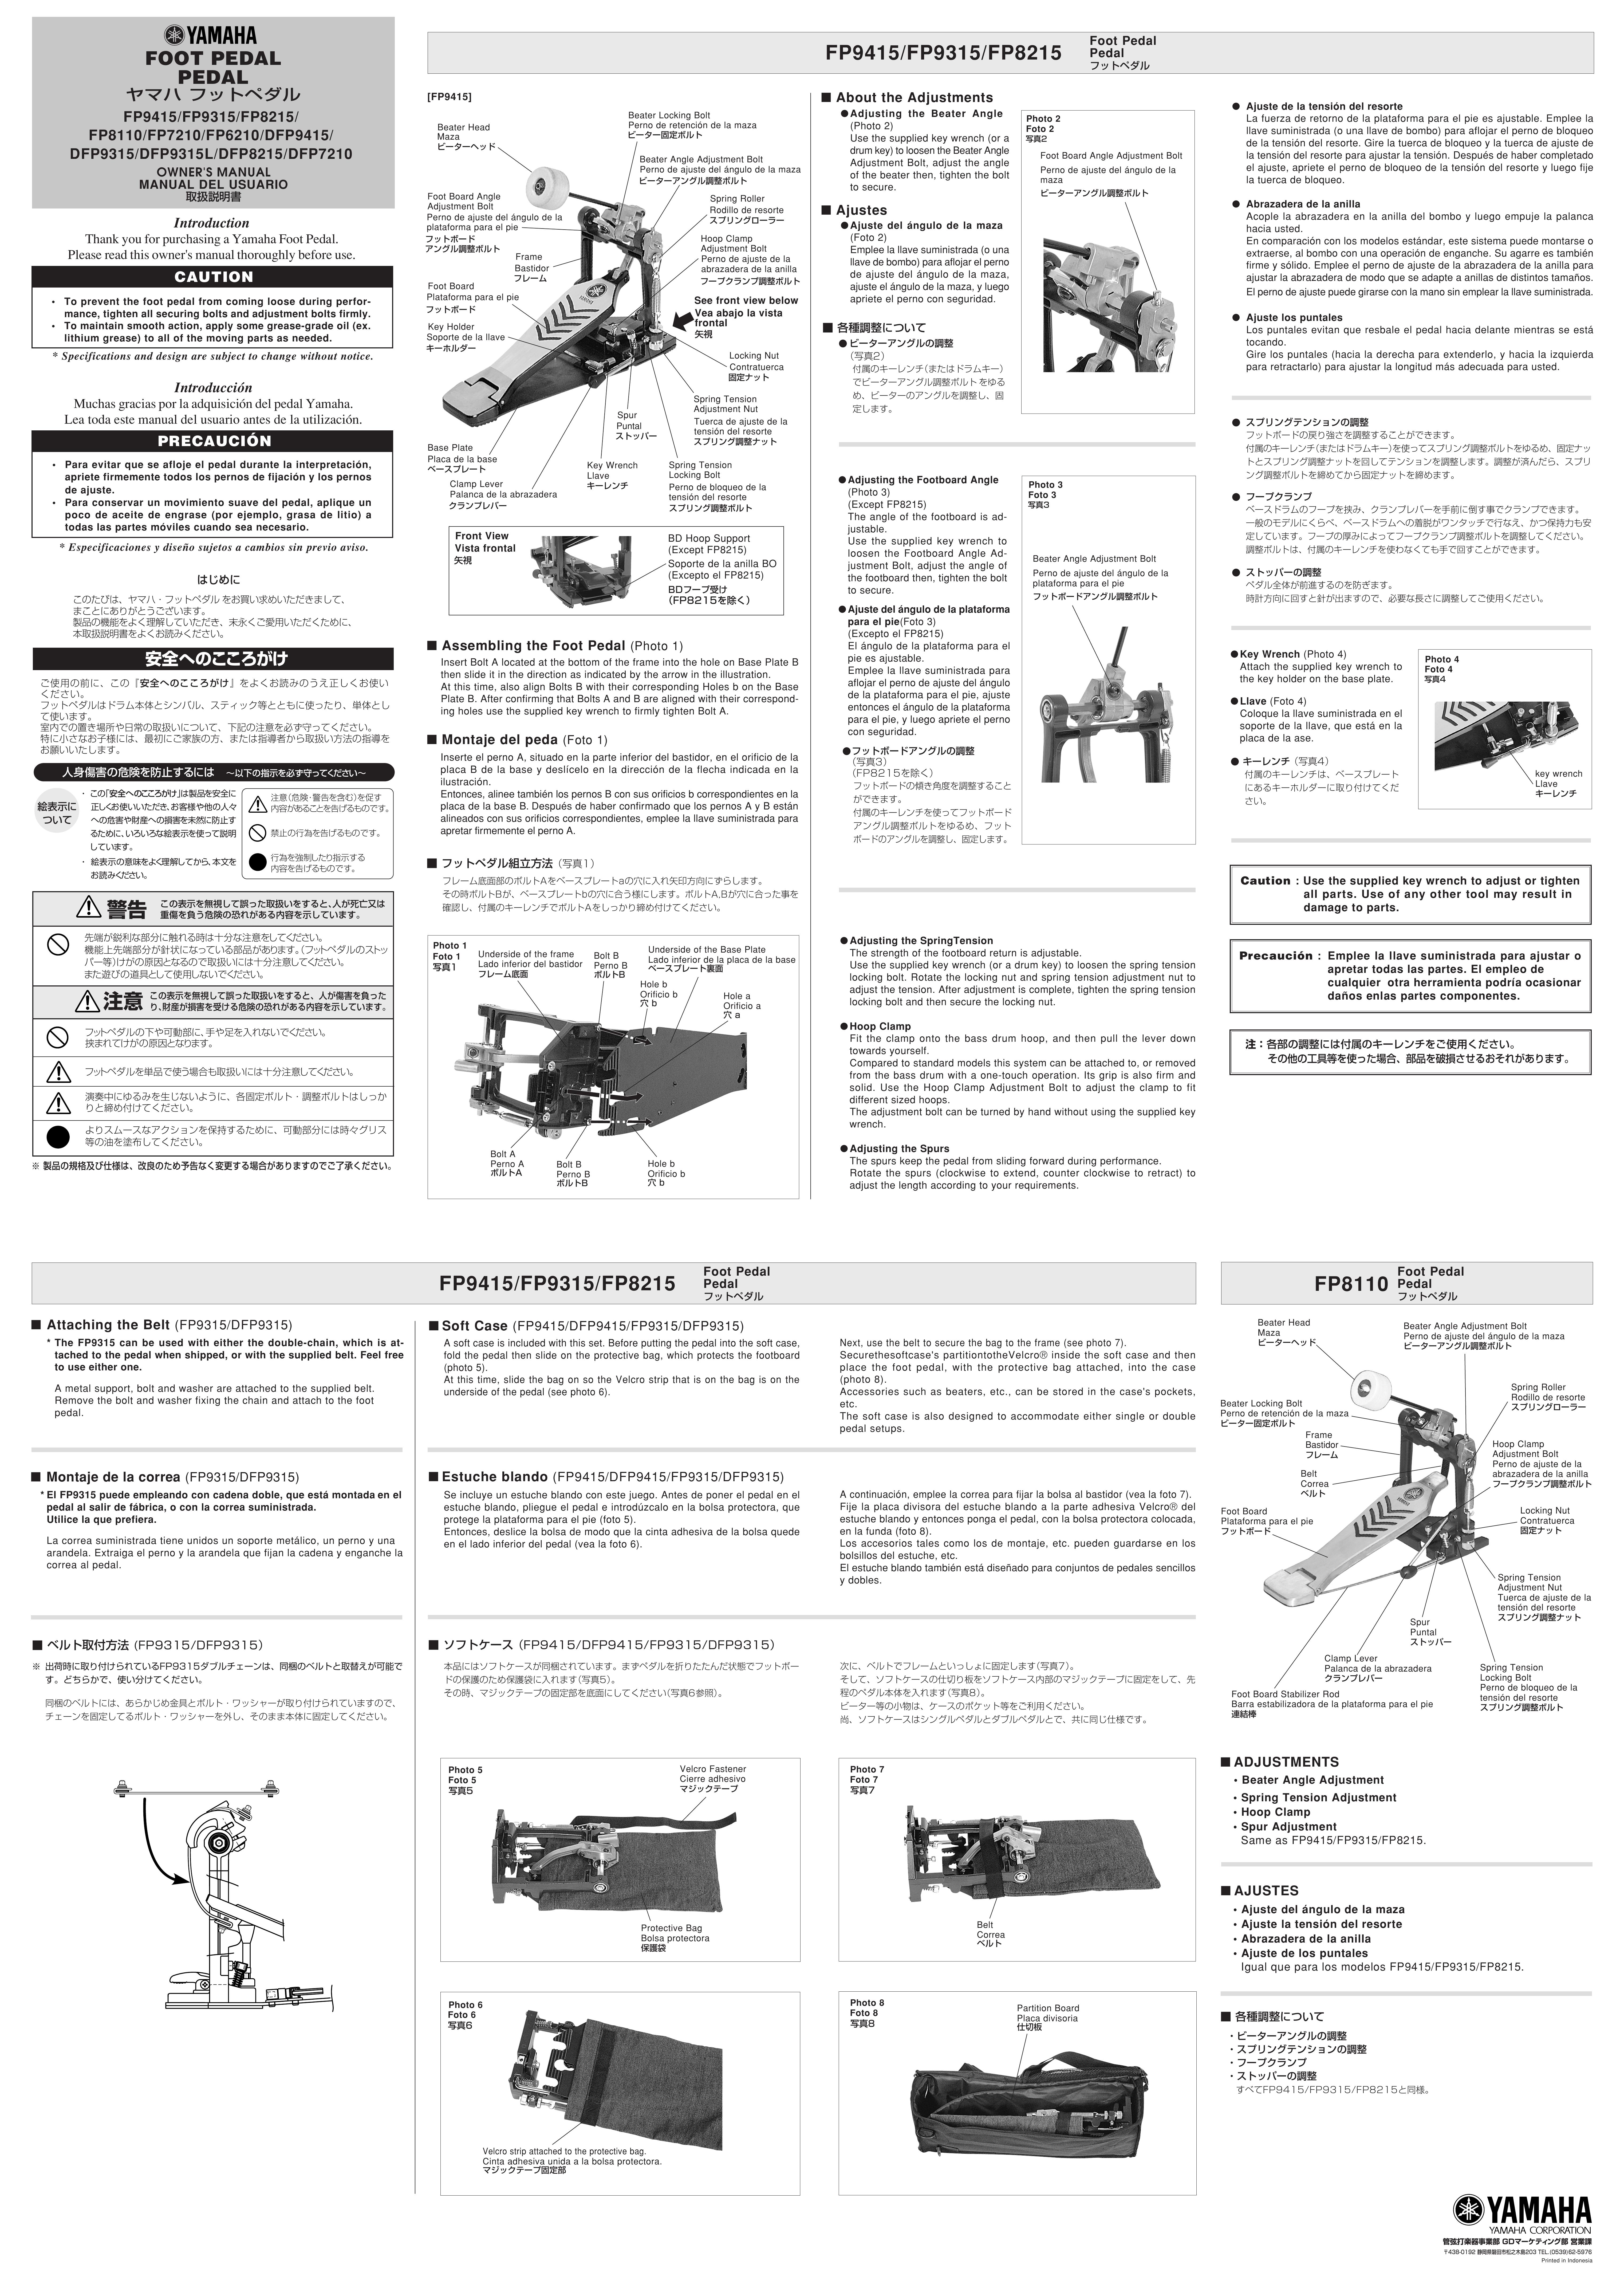 Yamaha FP7210 Music Pedal User Manual